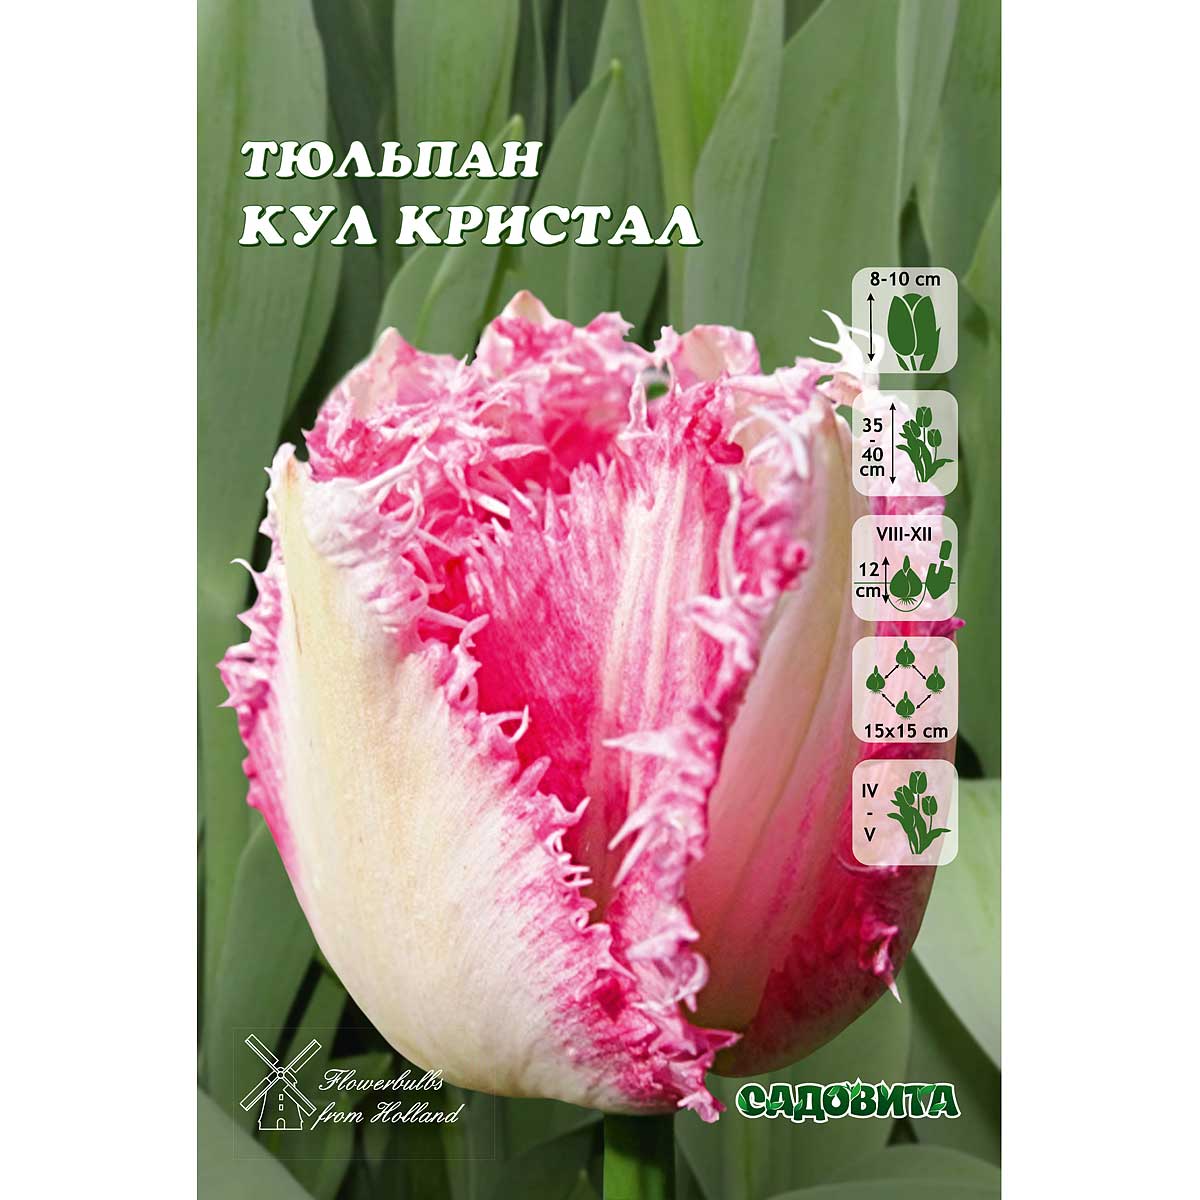 Кул кристал тюльпан фото и описание